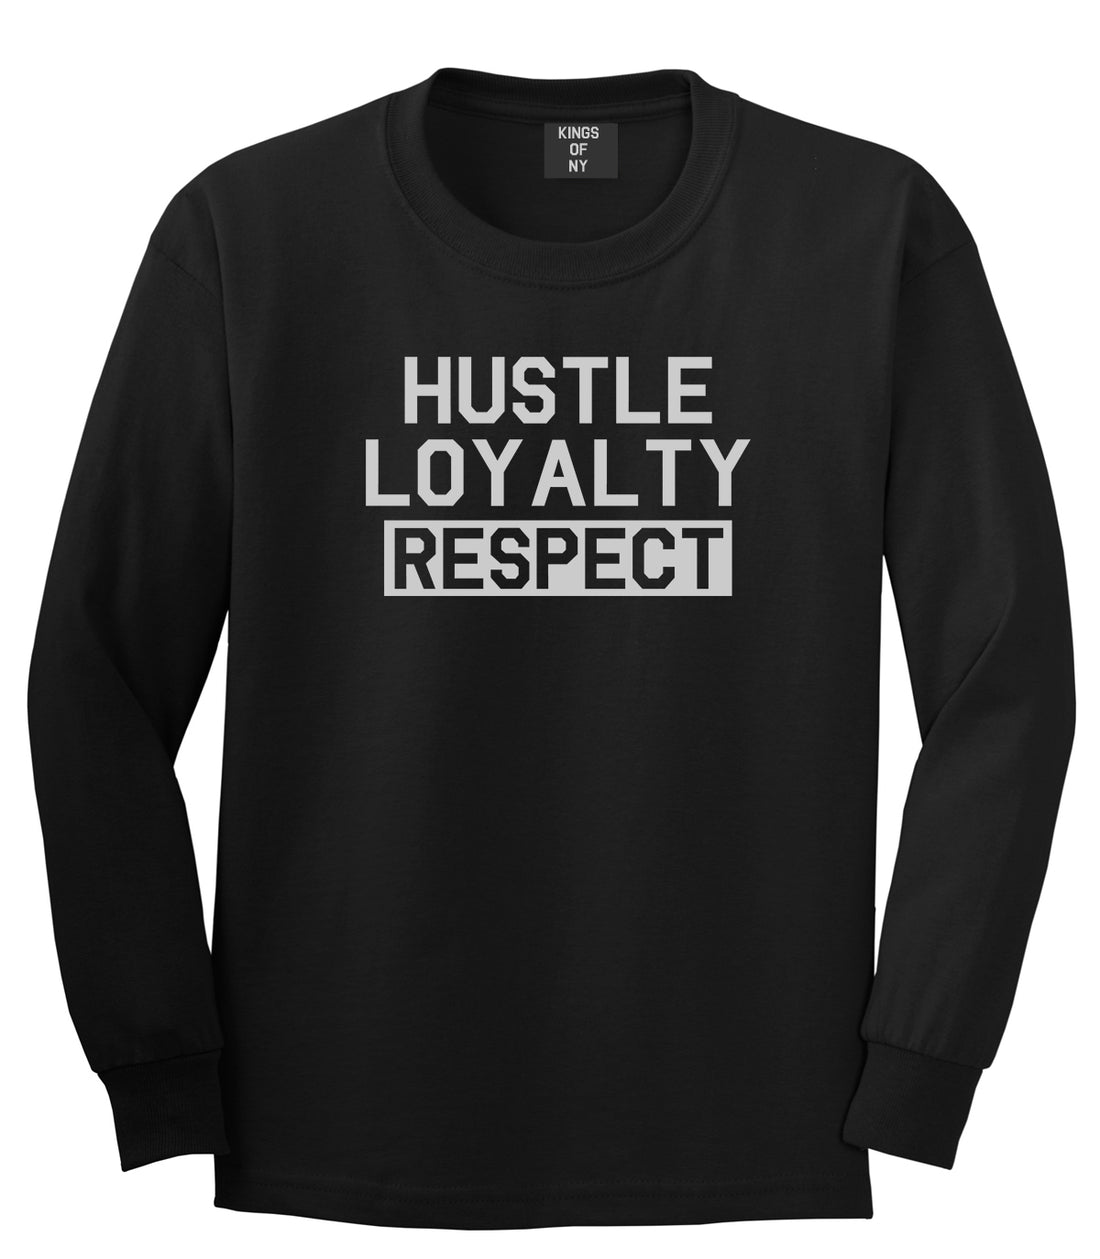 Hustle Loyalty Respect Mens Long Sleeve T-Shirt Black by Kings Of NY